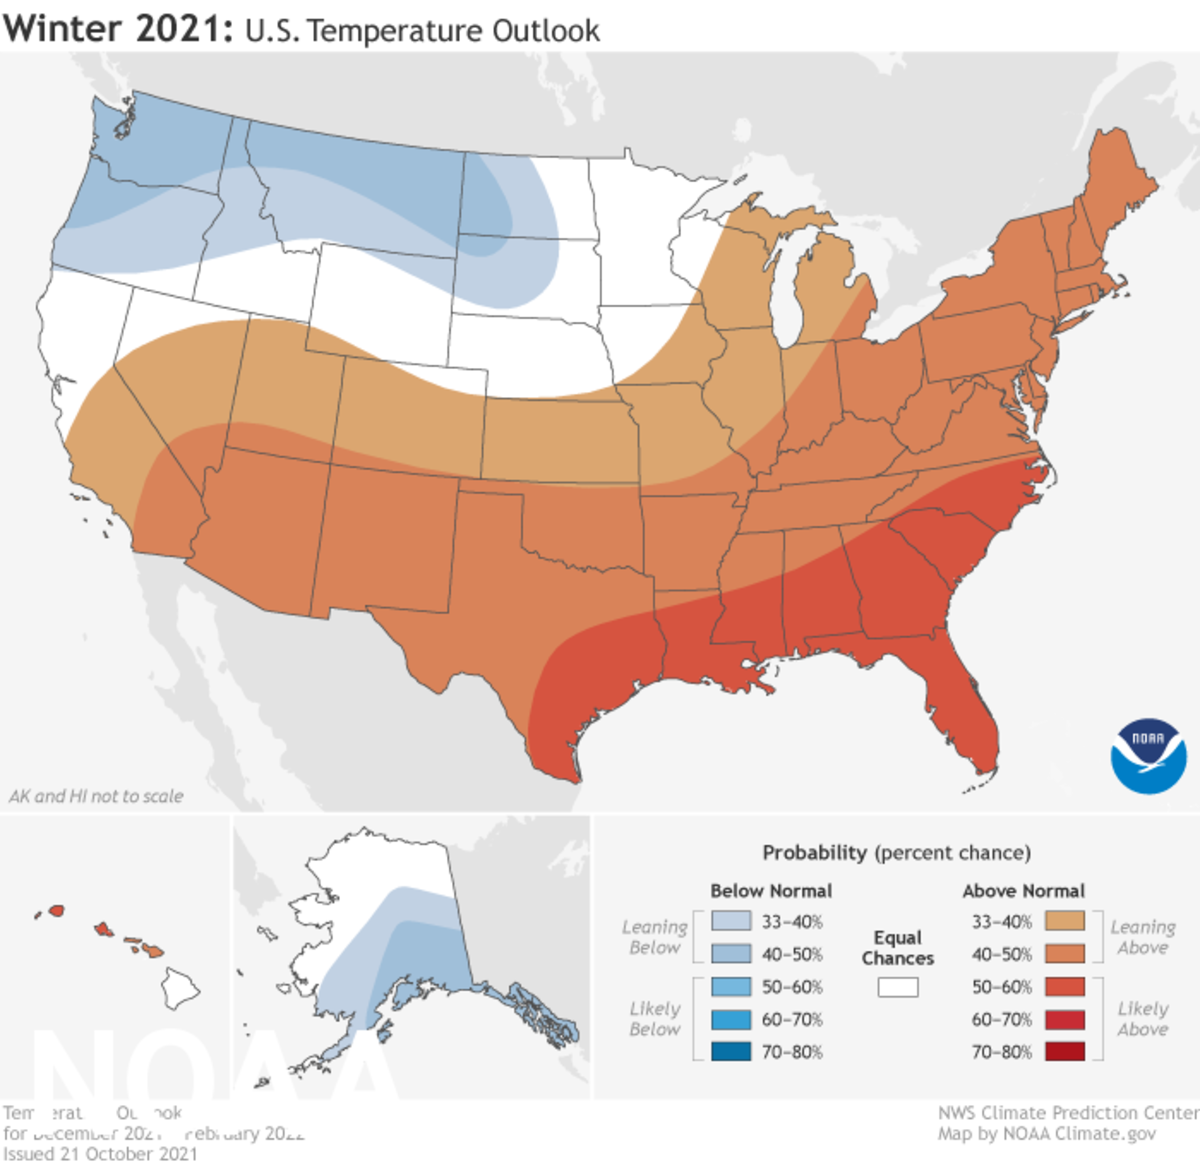 IMAGE-winteroutlook_seasonal_temperature_2021_700-102121